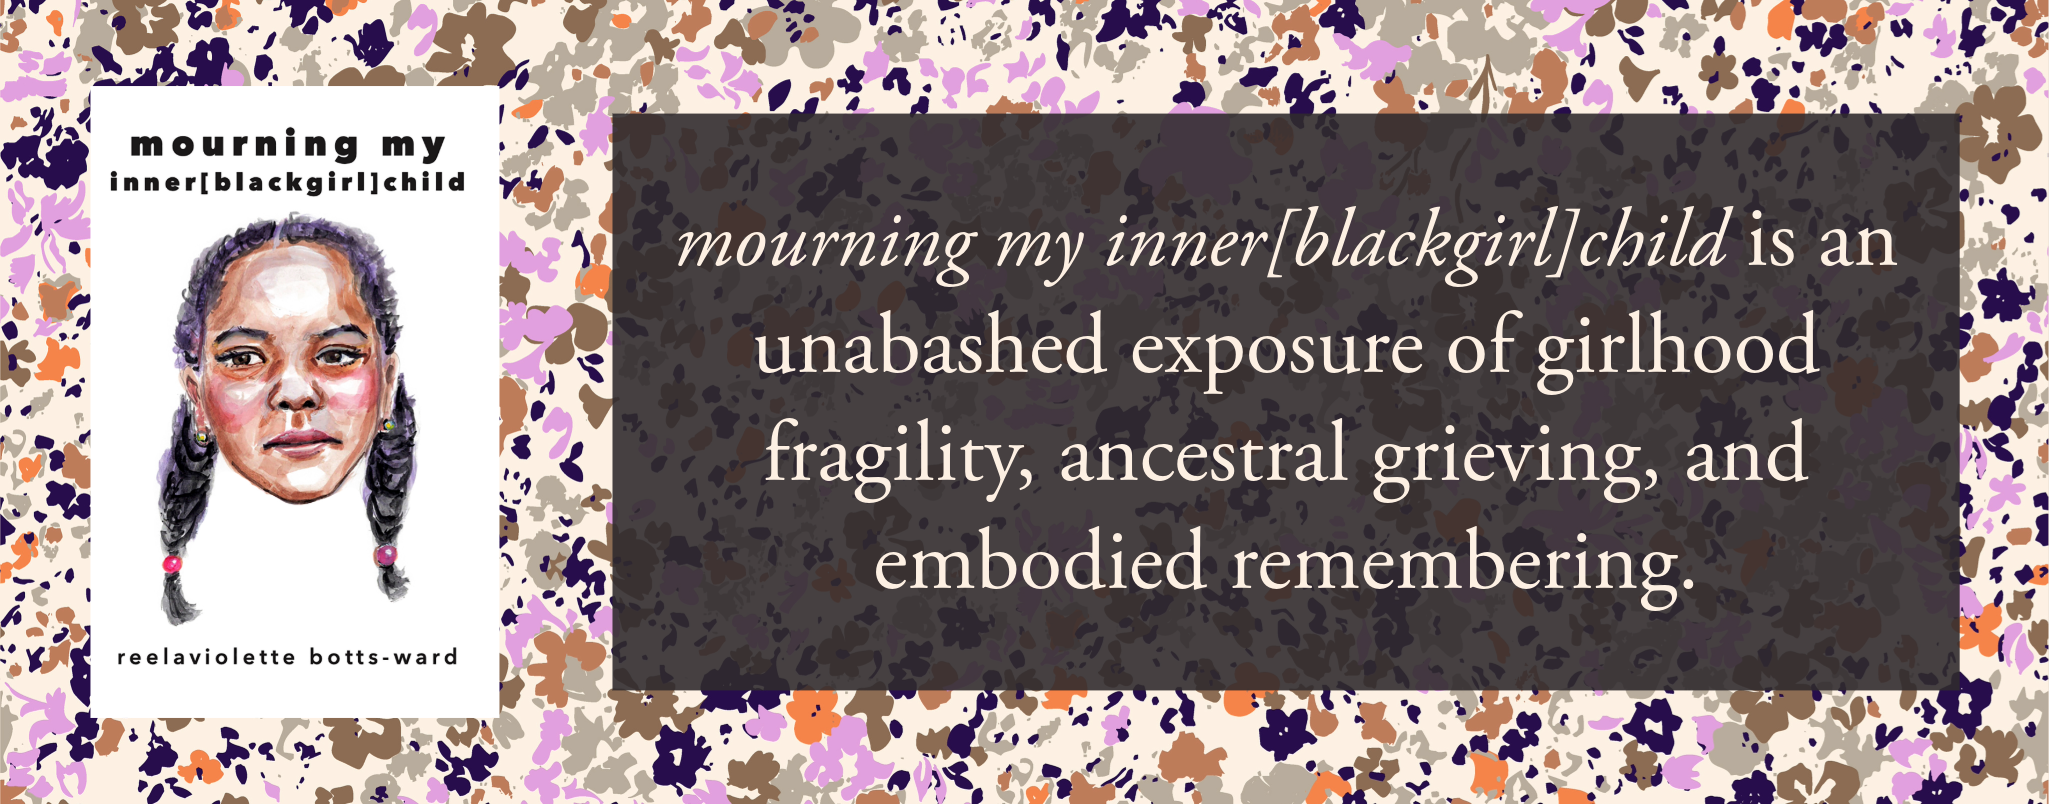 mourning my inner[blackgirl]child